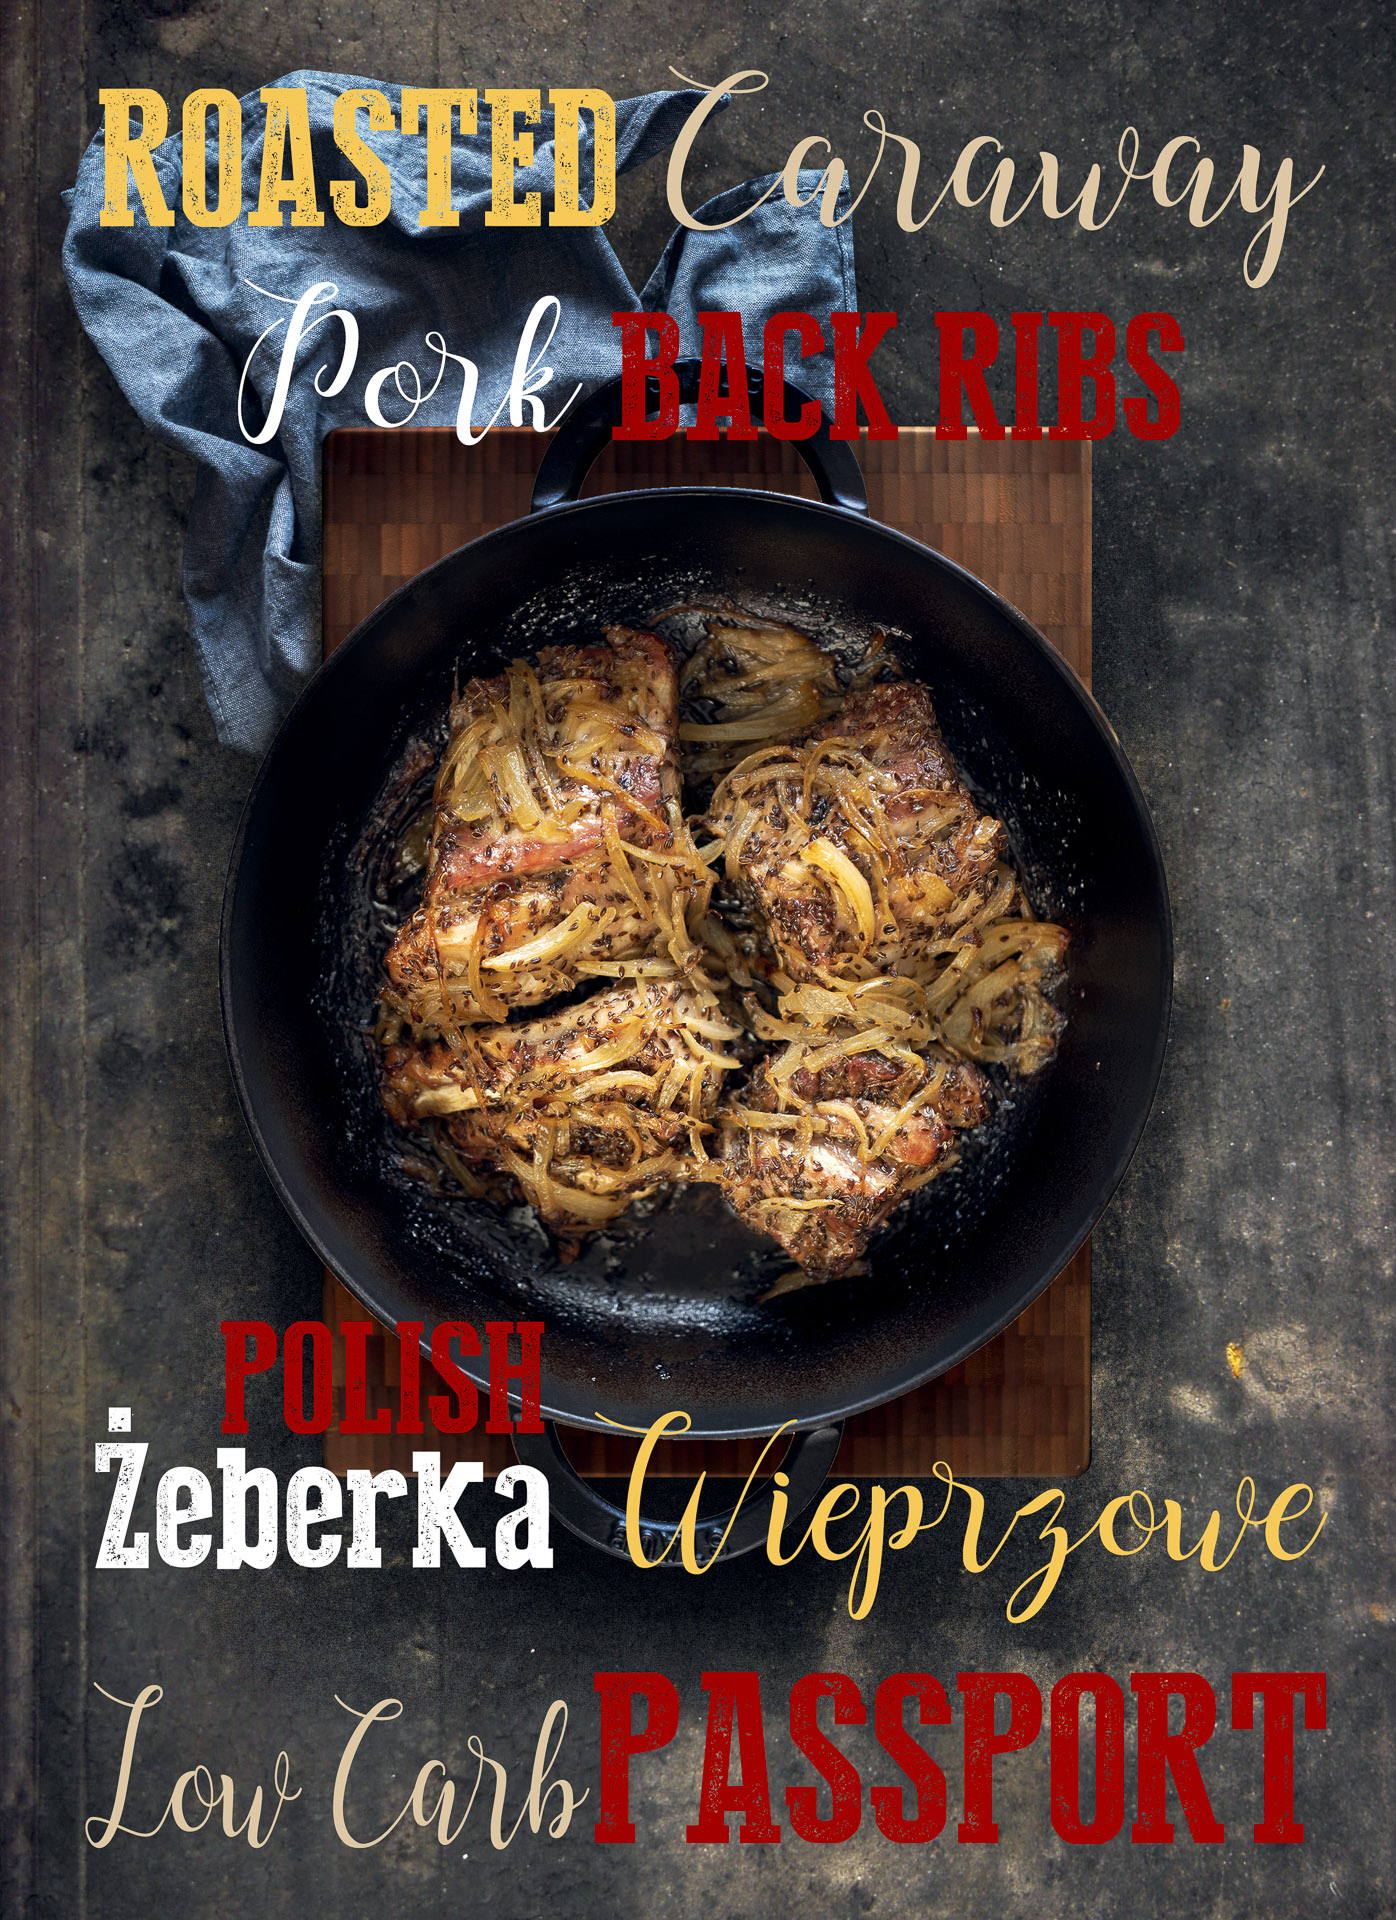 Polish Żeberka Wieprzowe Roasted Caraway Pork Back Ribs